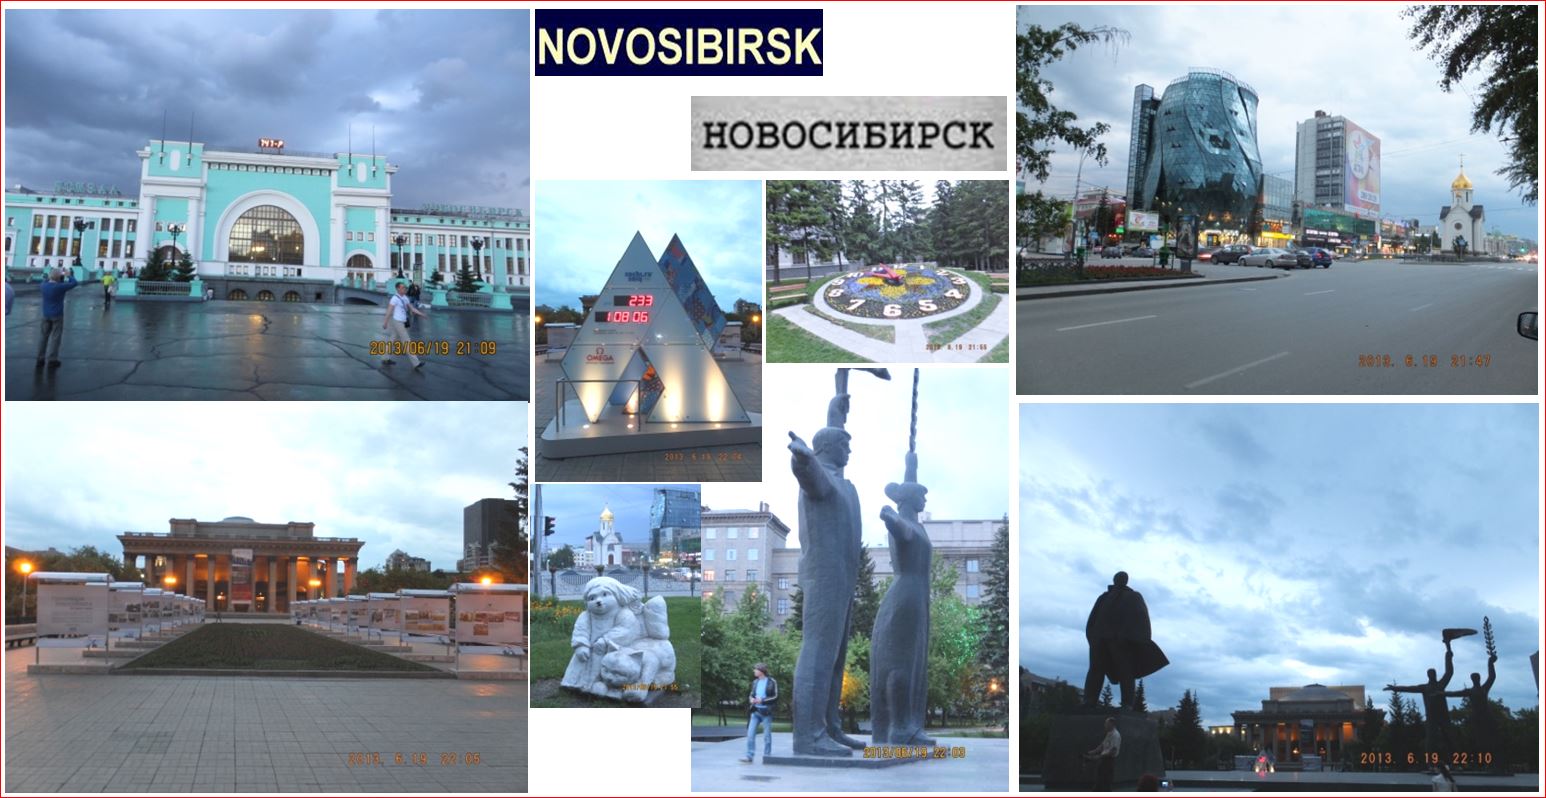 ragg 2013-06-19 - 1130Aweb - Transsib - Russland Novosibirsk - Tag 12 - S15 B03